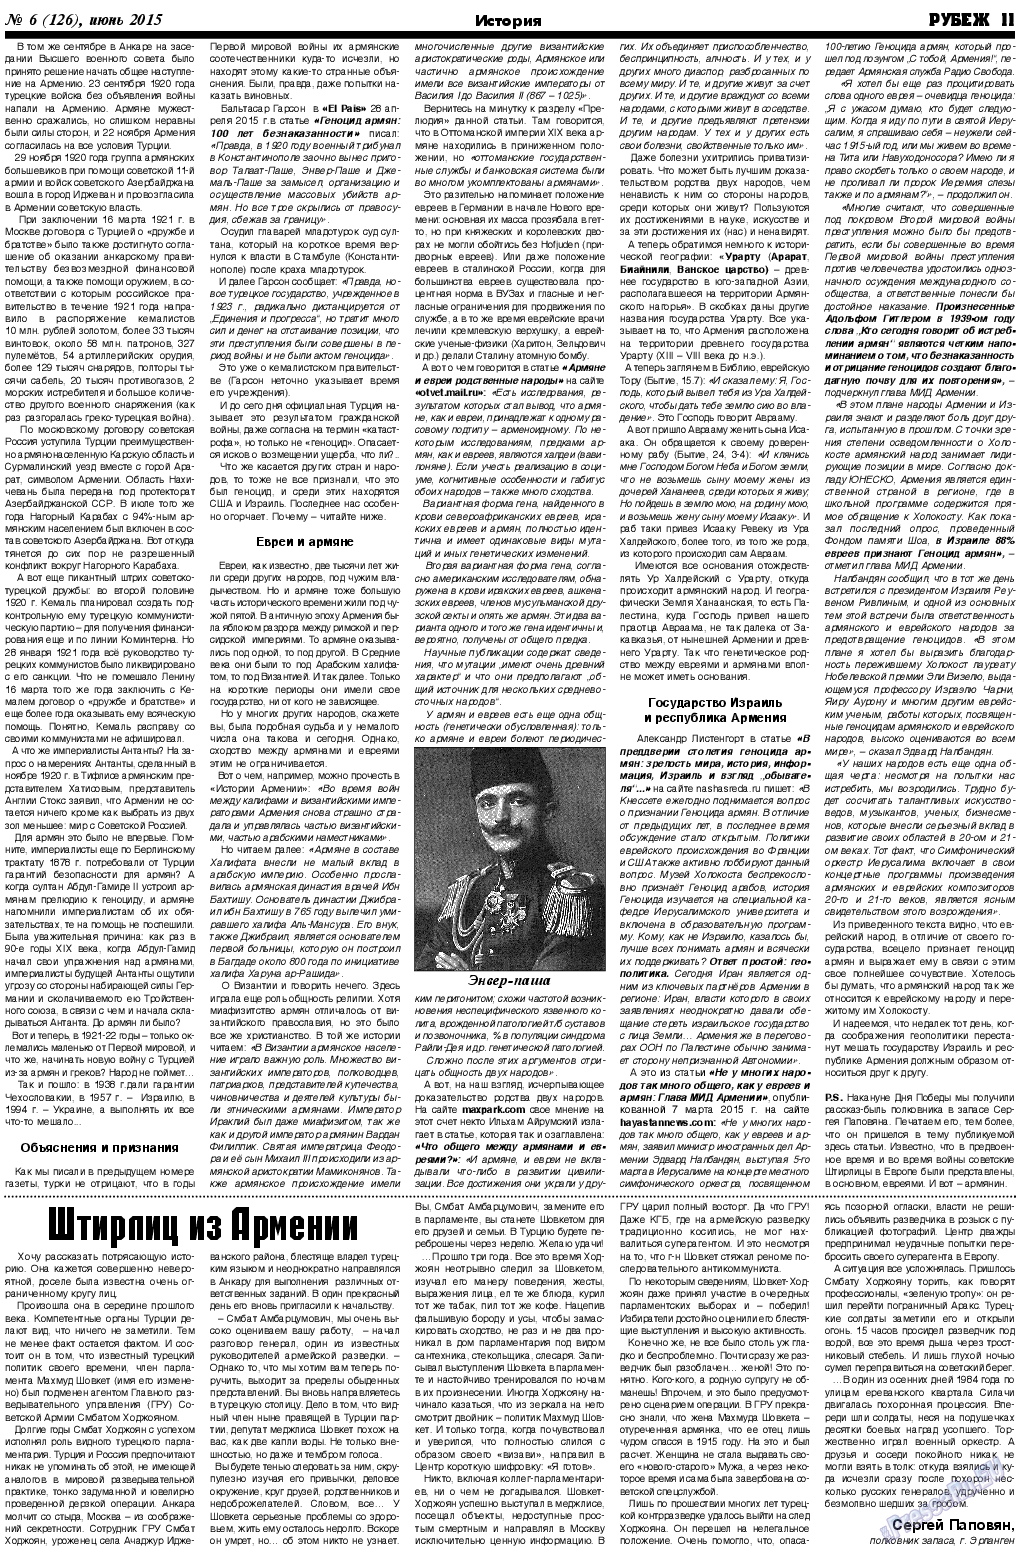 Рубеж, газета. 2015 №6 стр.11